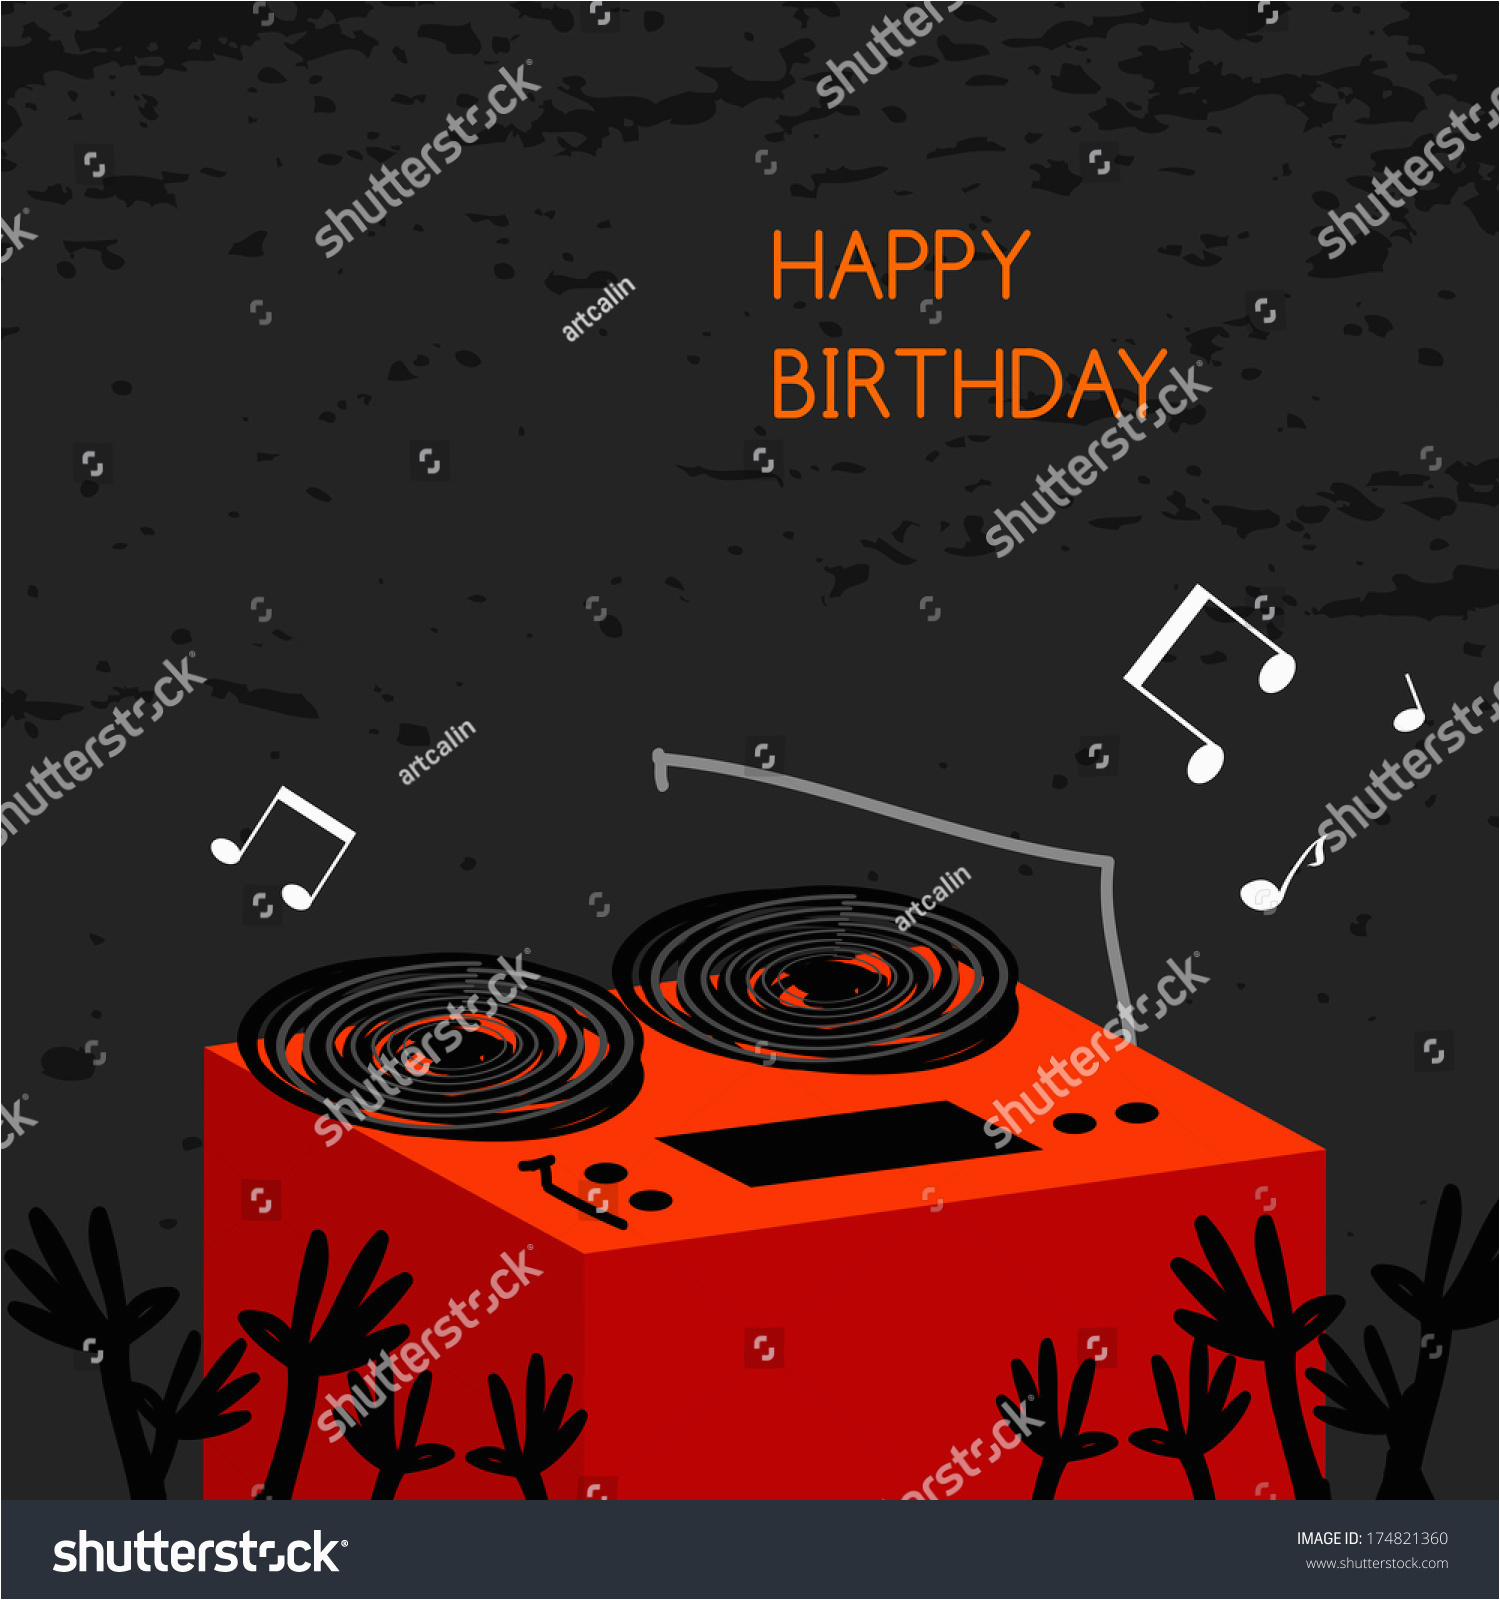 happy birthday greeting card anniversary vector 174821360